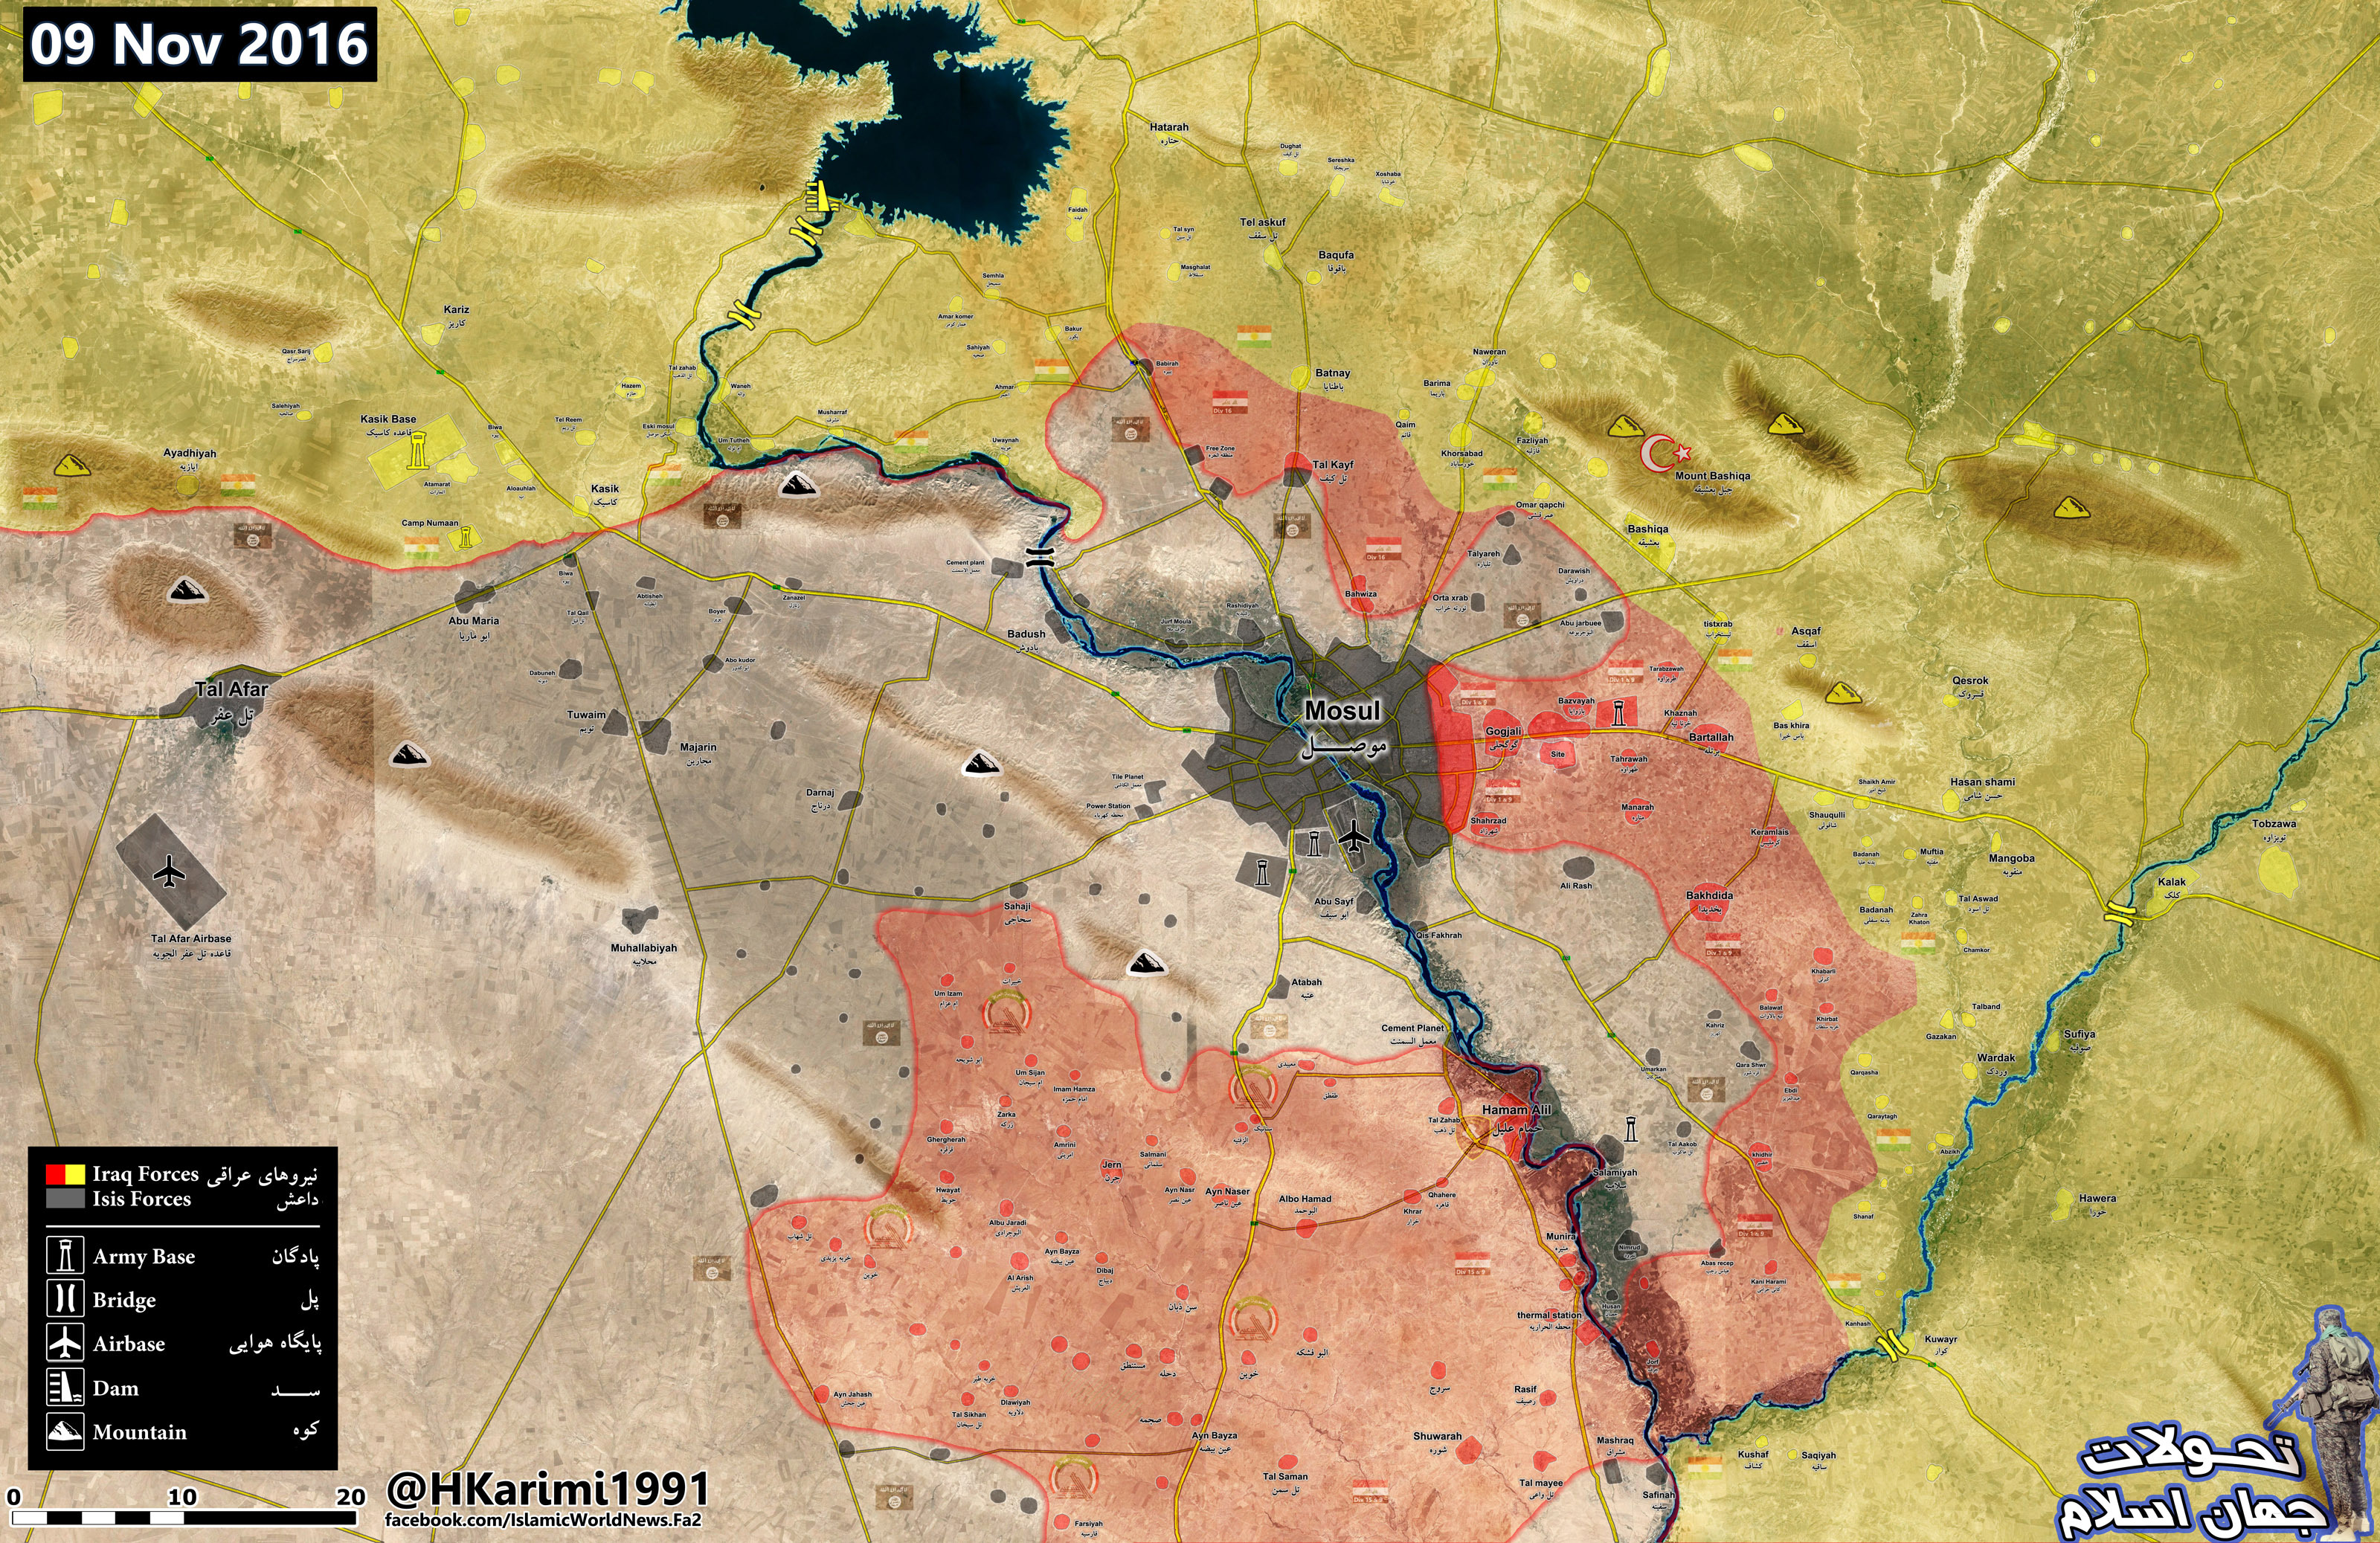 Battle for Mosul on November 10, 2016